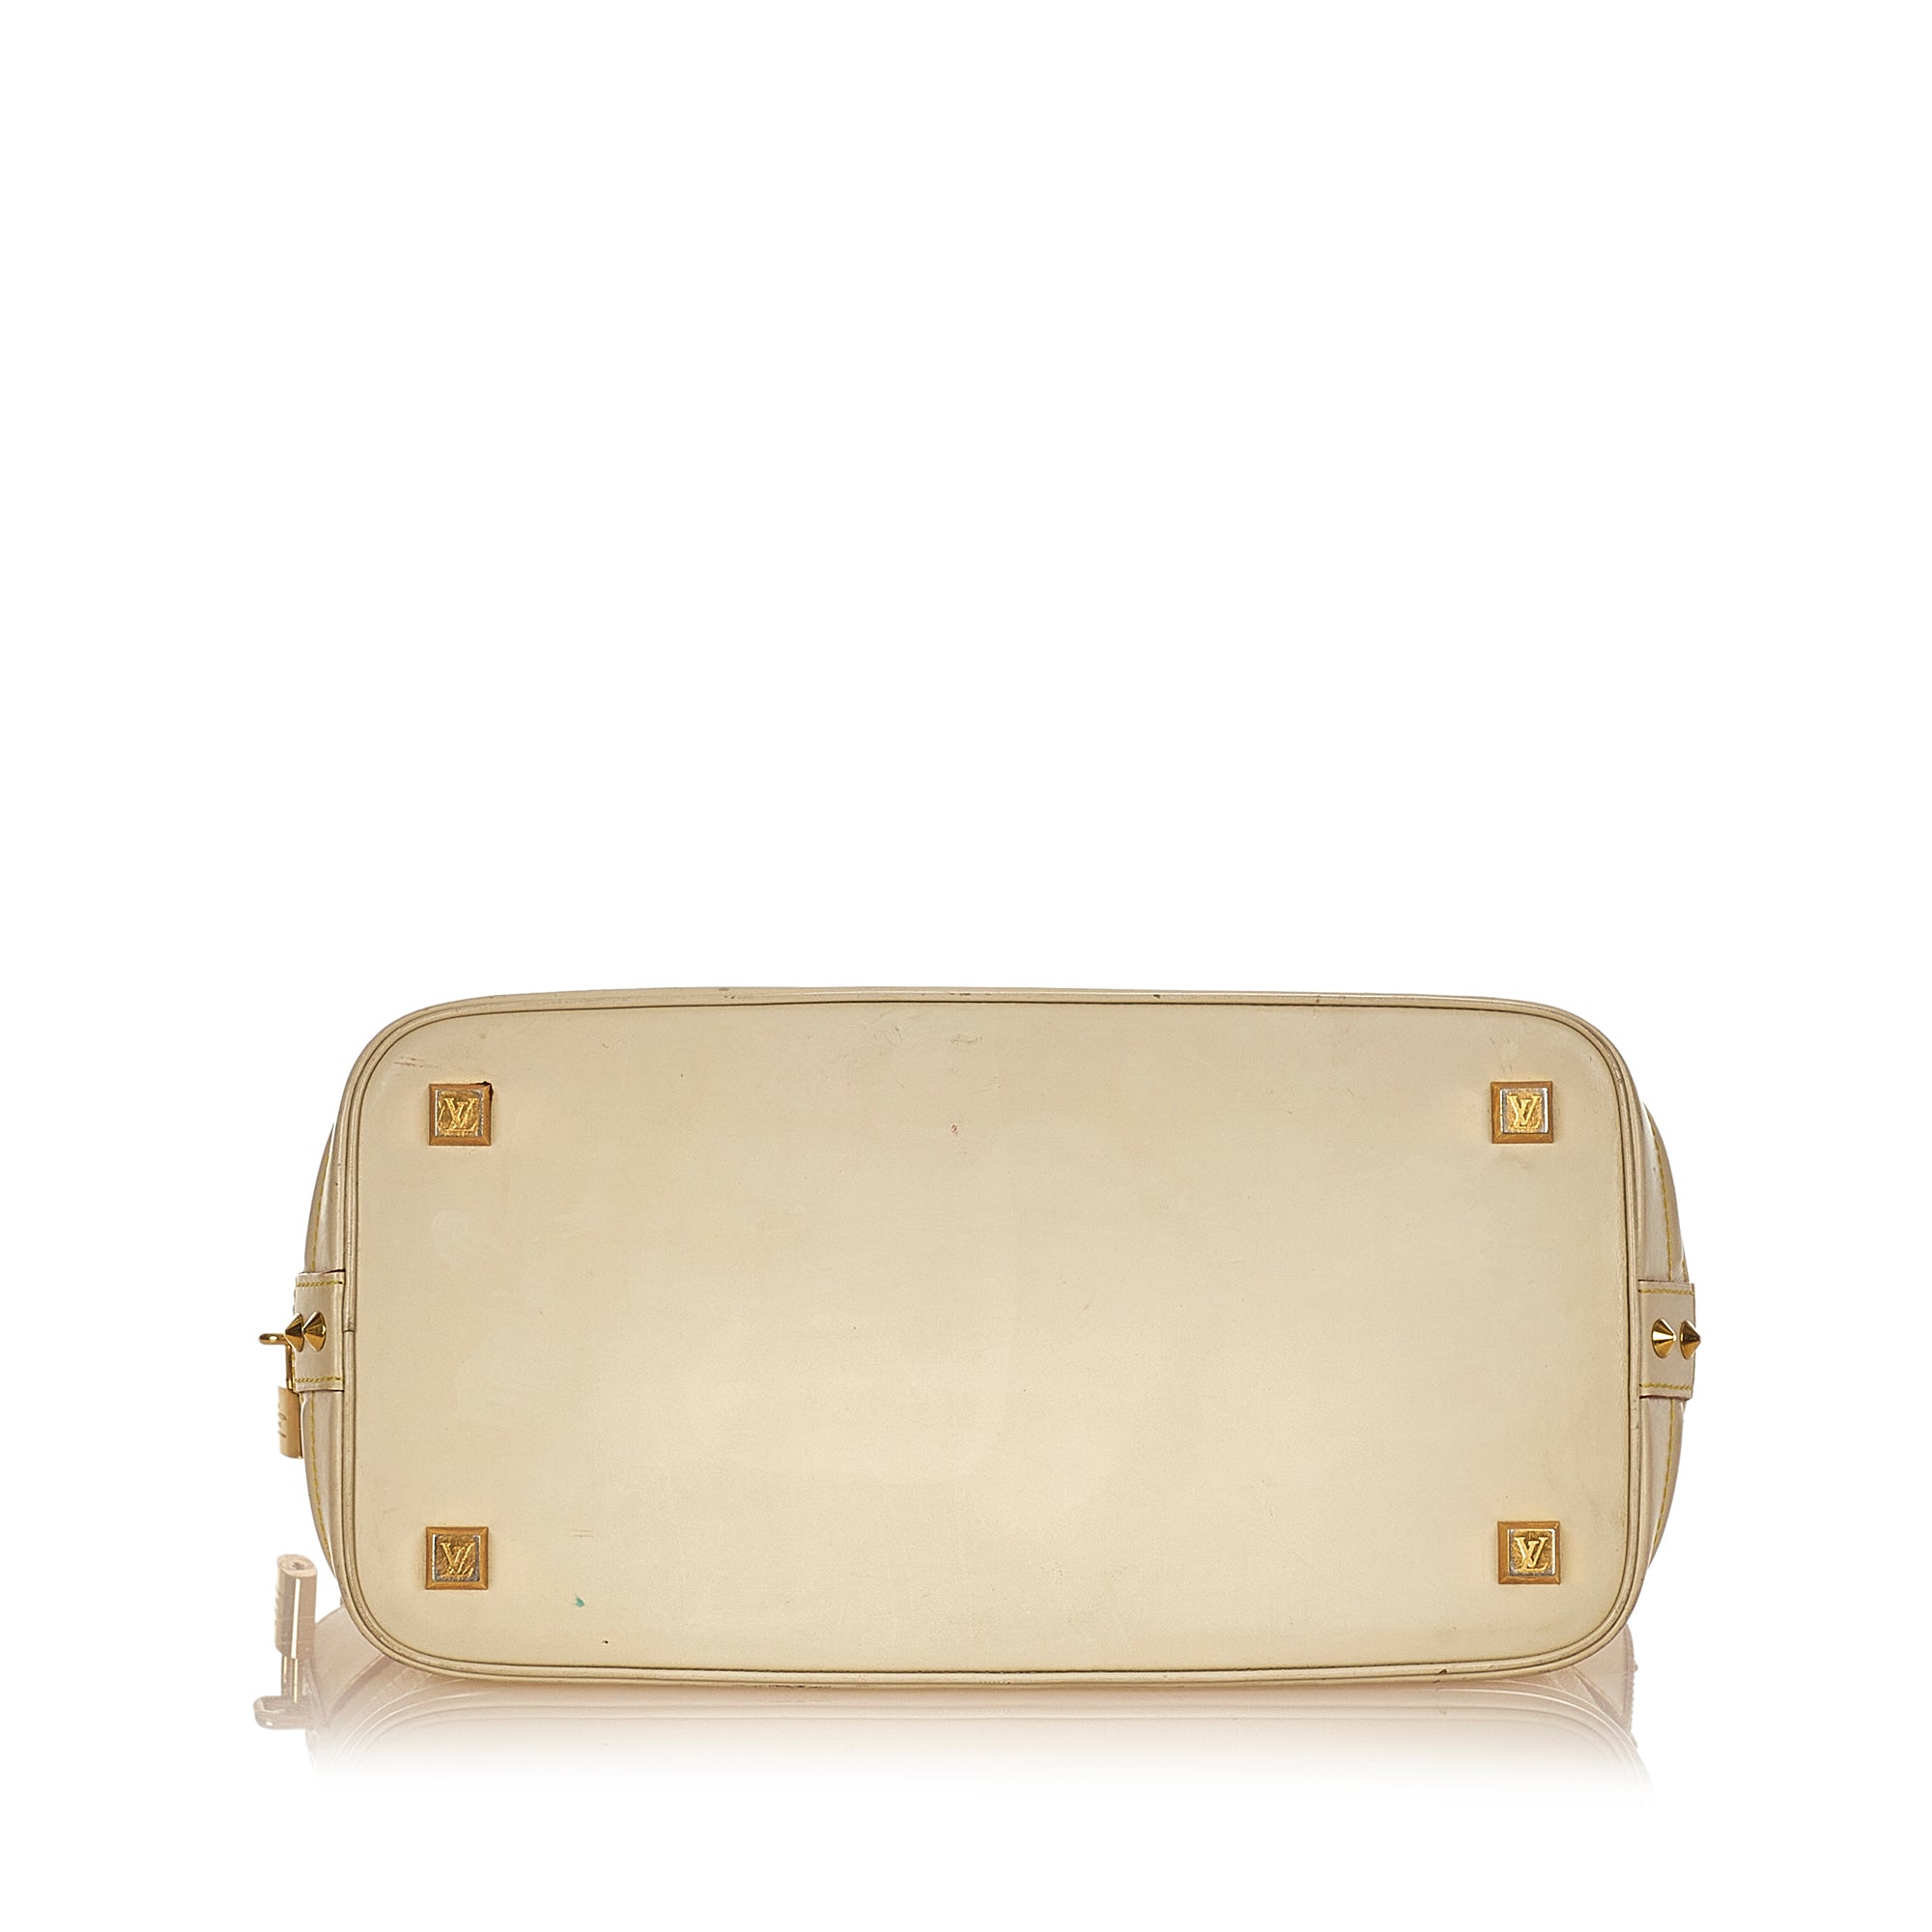 Beige Louis Vuitton Suhali Lockit MM Handbag – Designer Revival